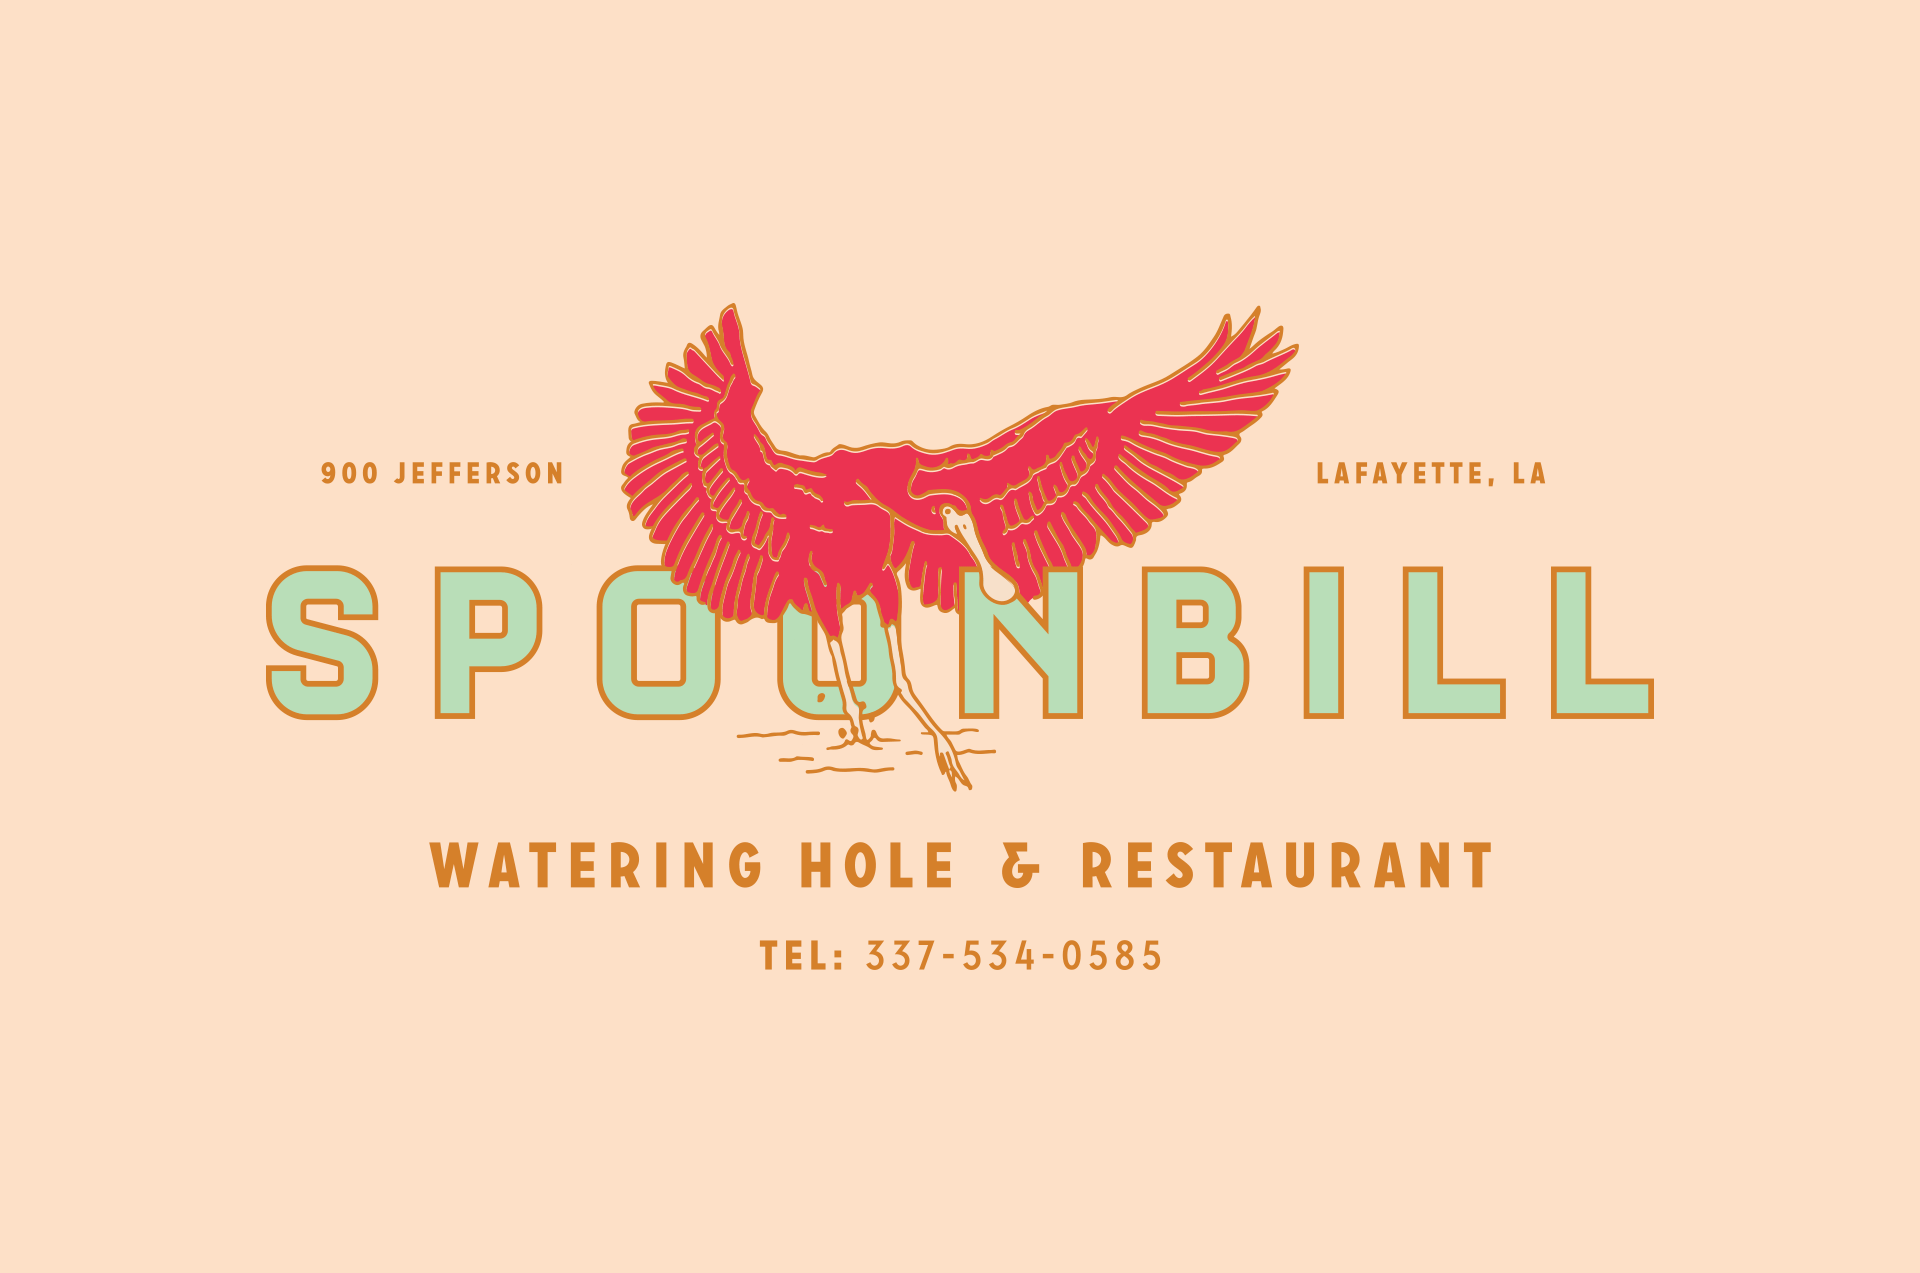 Restaurant Logo Design - Spoonbill, LA